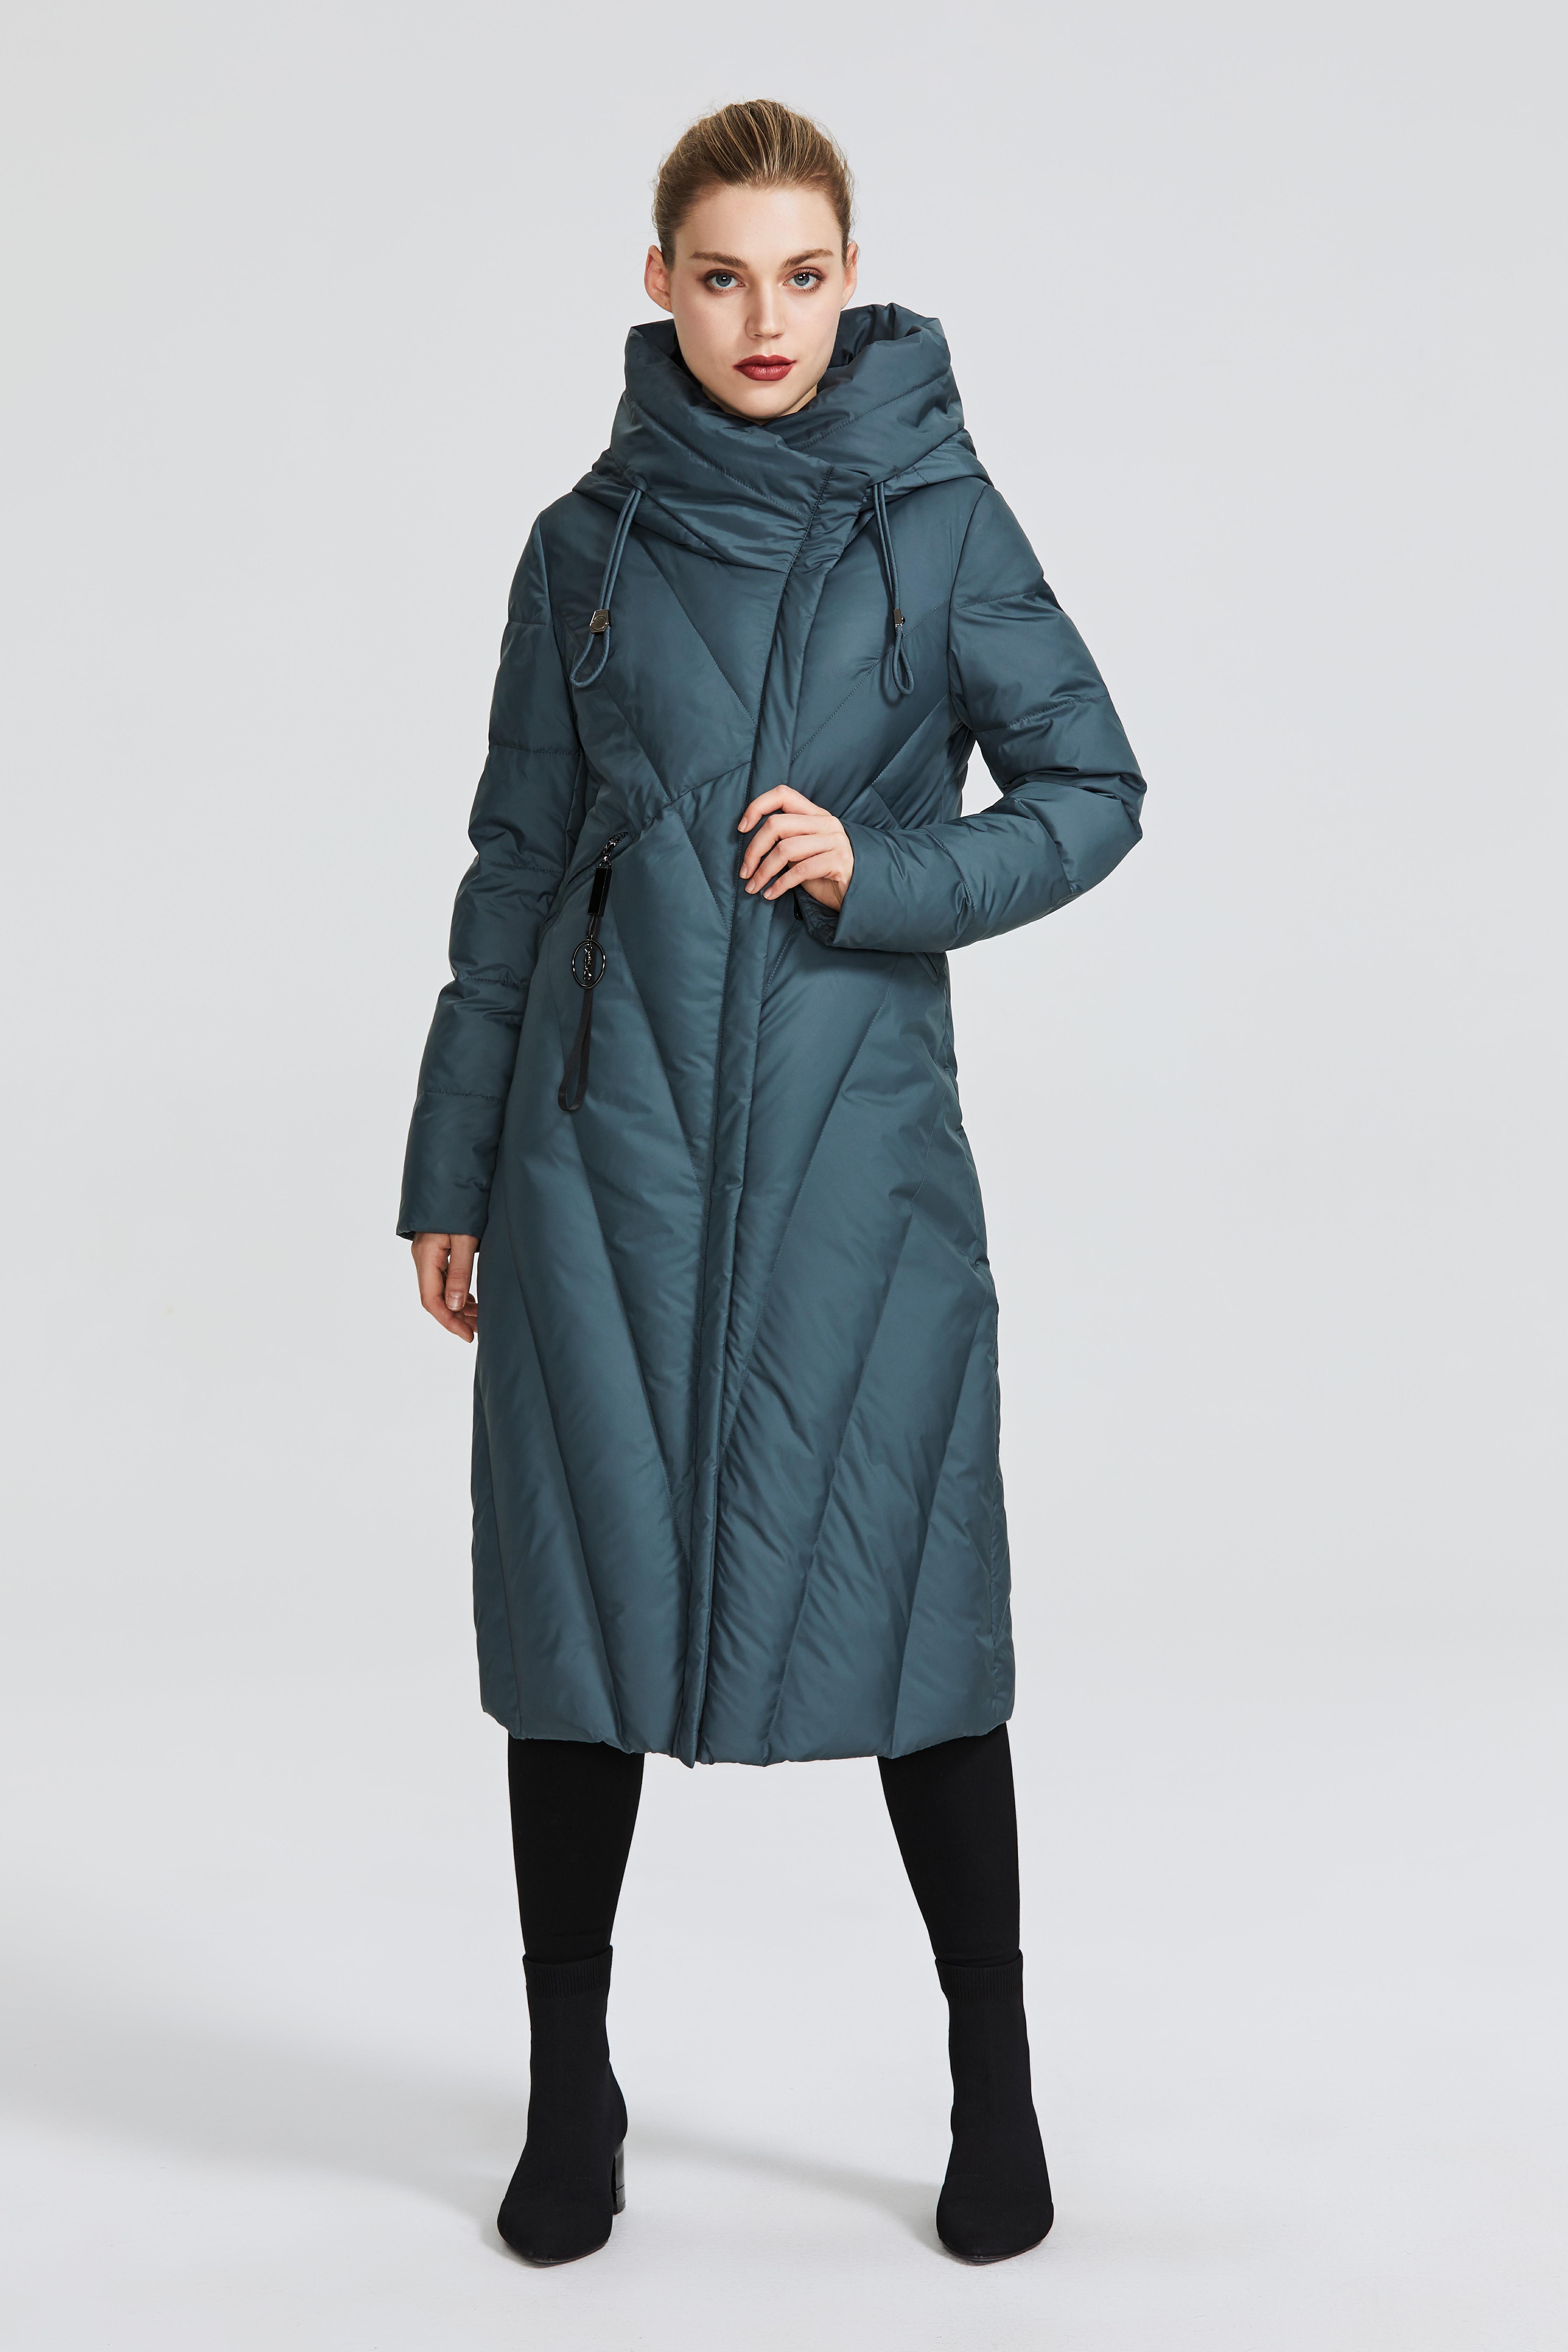 MIEGOFCE D99266 방풍 칼라가 있는 새로운 컬렉션 여성 코트 여성용 파카